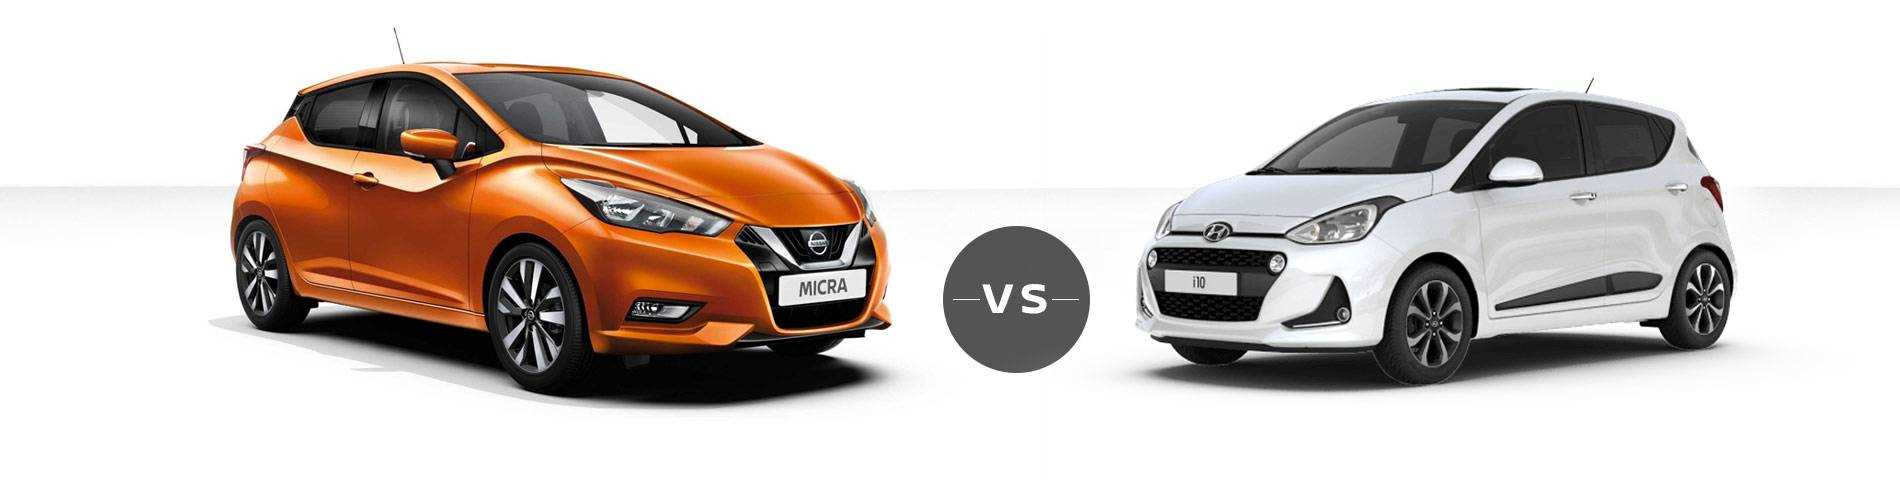 Nissan Micra vs Hyundai i10